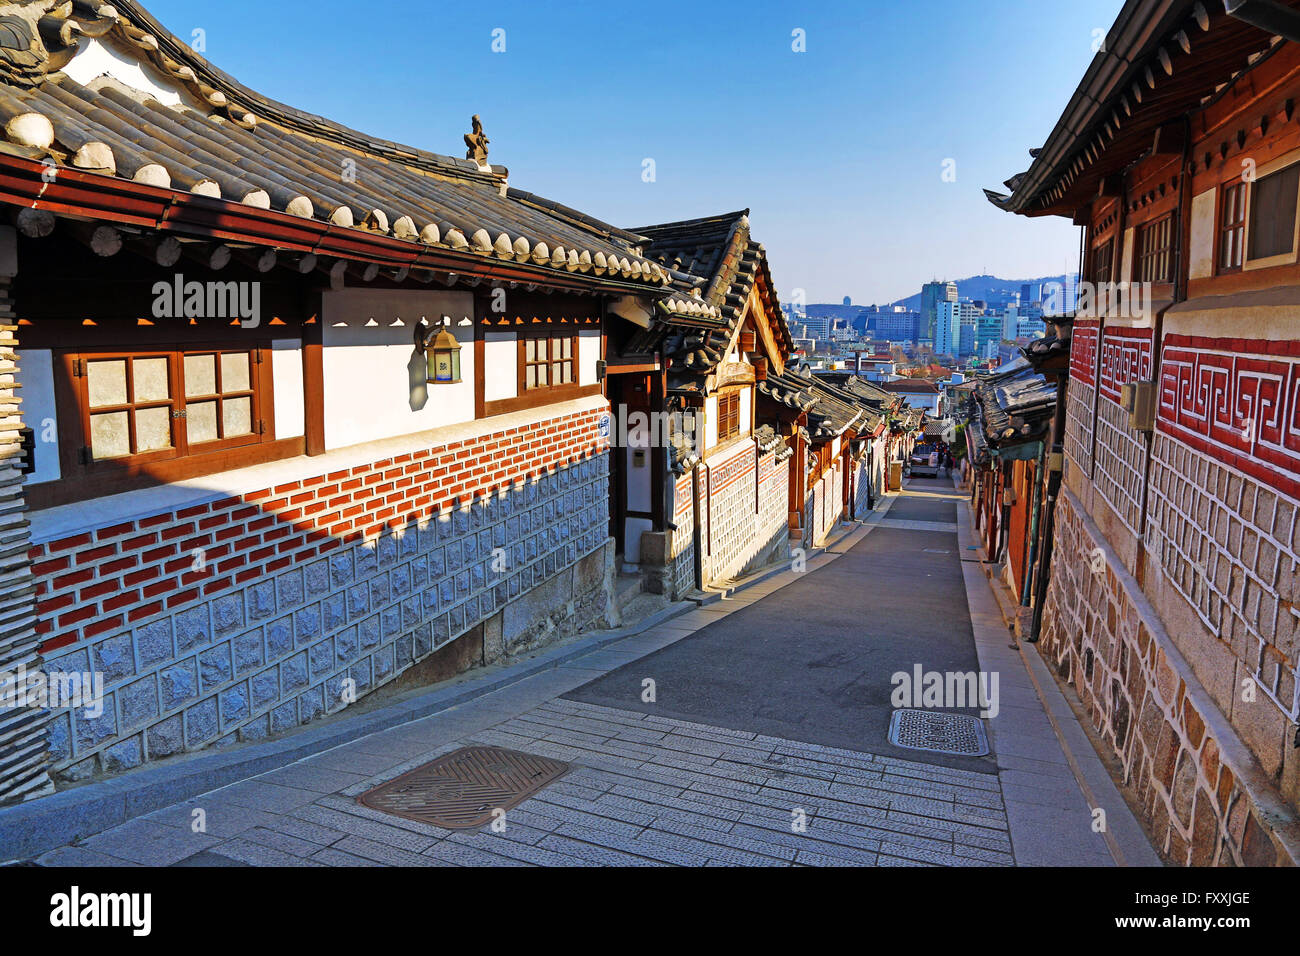 Street scene in the old town of Bukchon Hanok village in Seoul, Korea Stock Photo